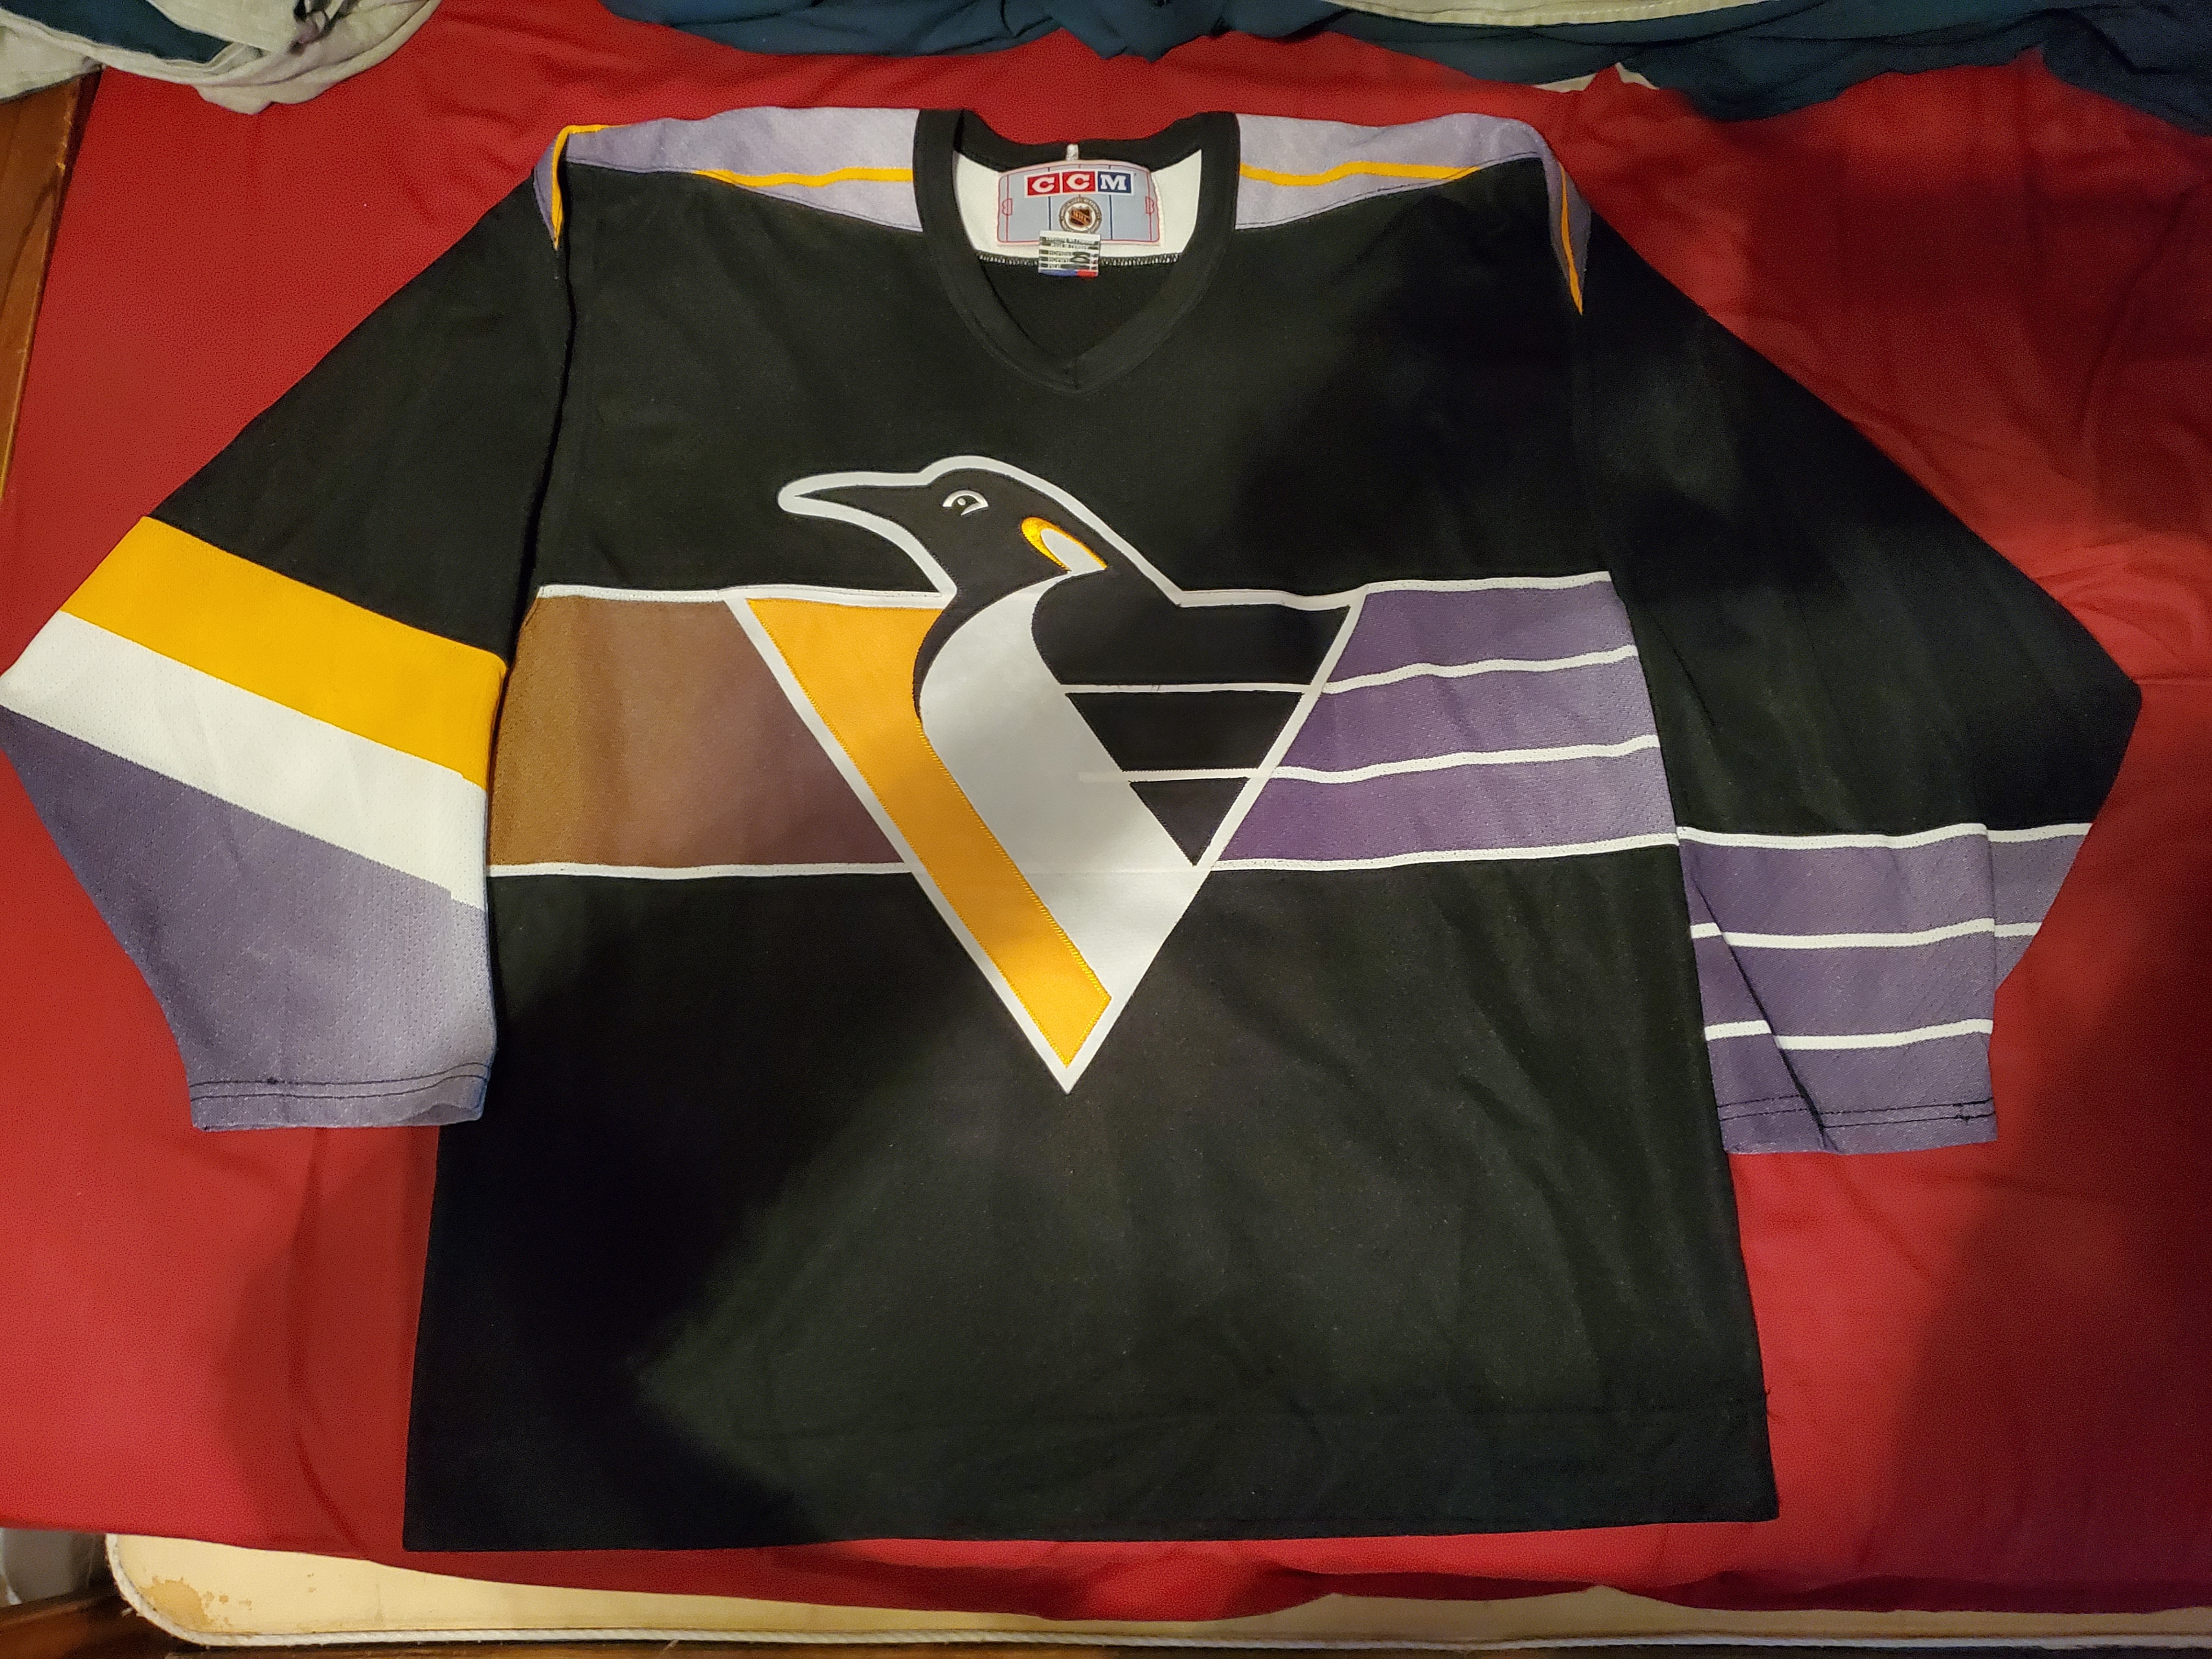 1995-96 Pittsburgh Penguins Alternate Game Worn Jerseys